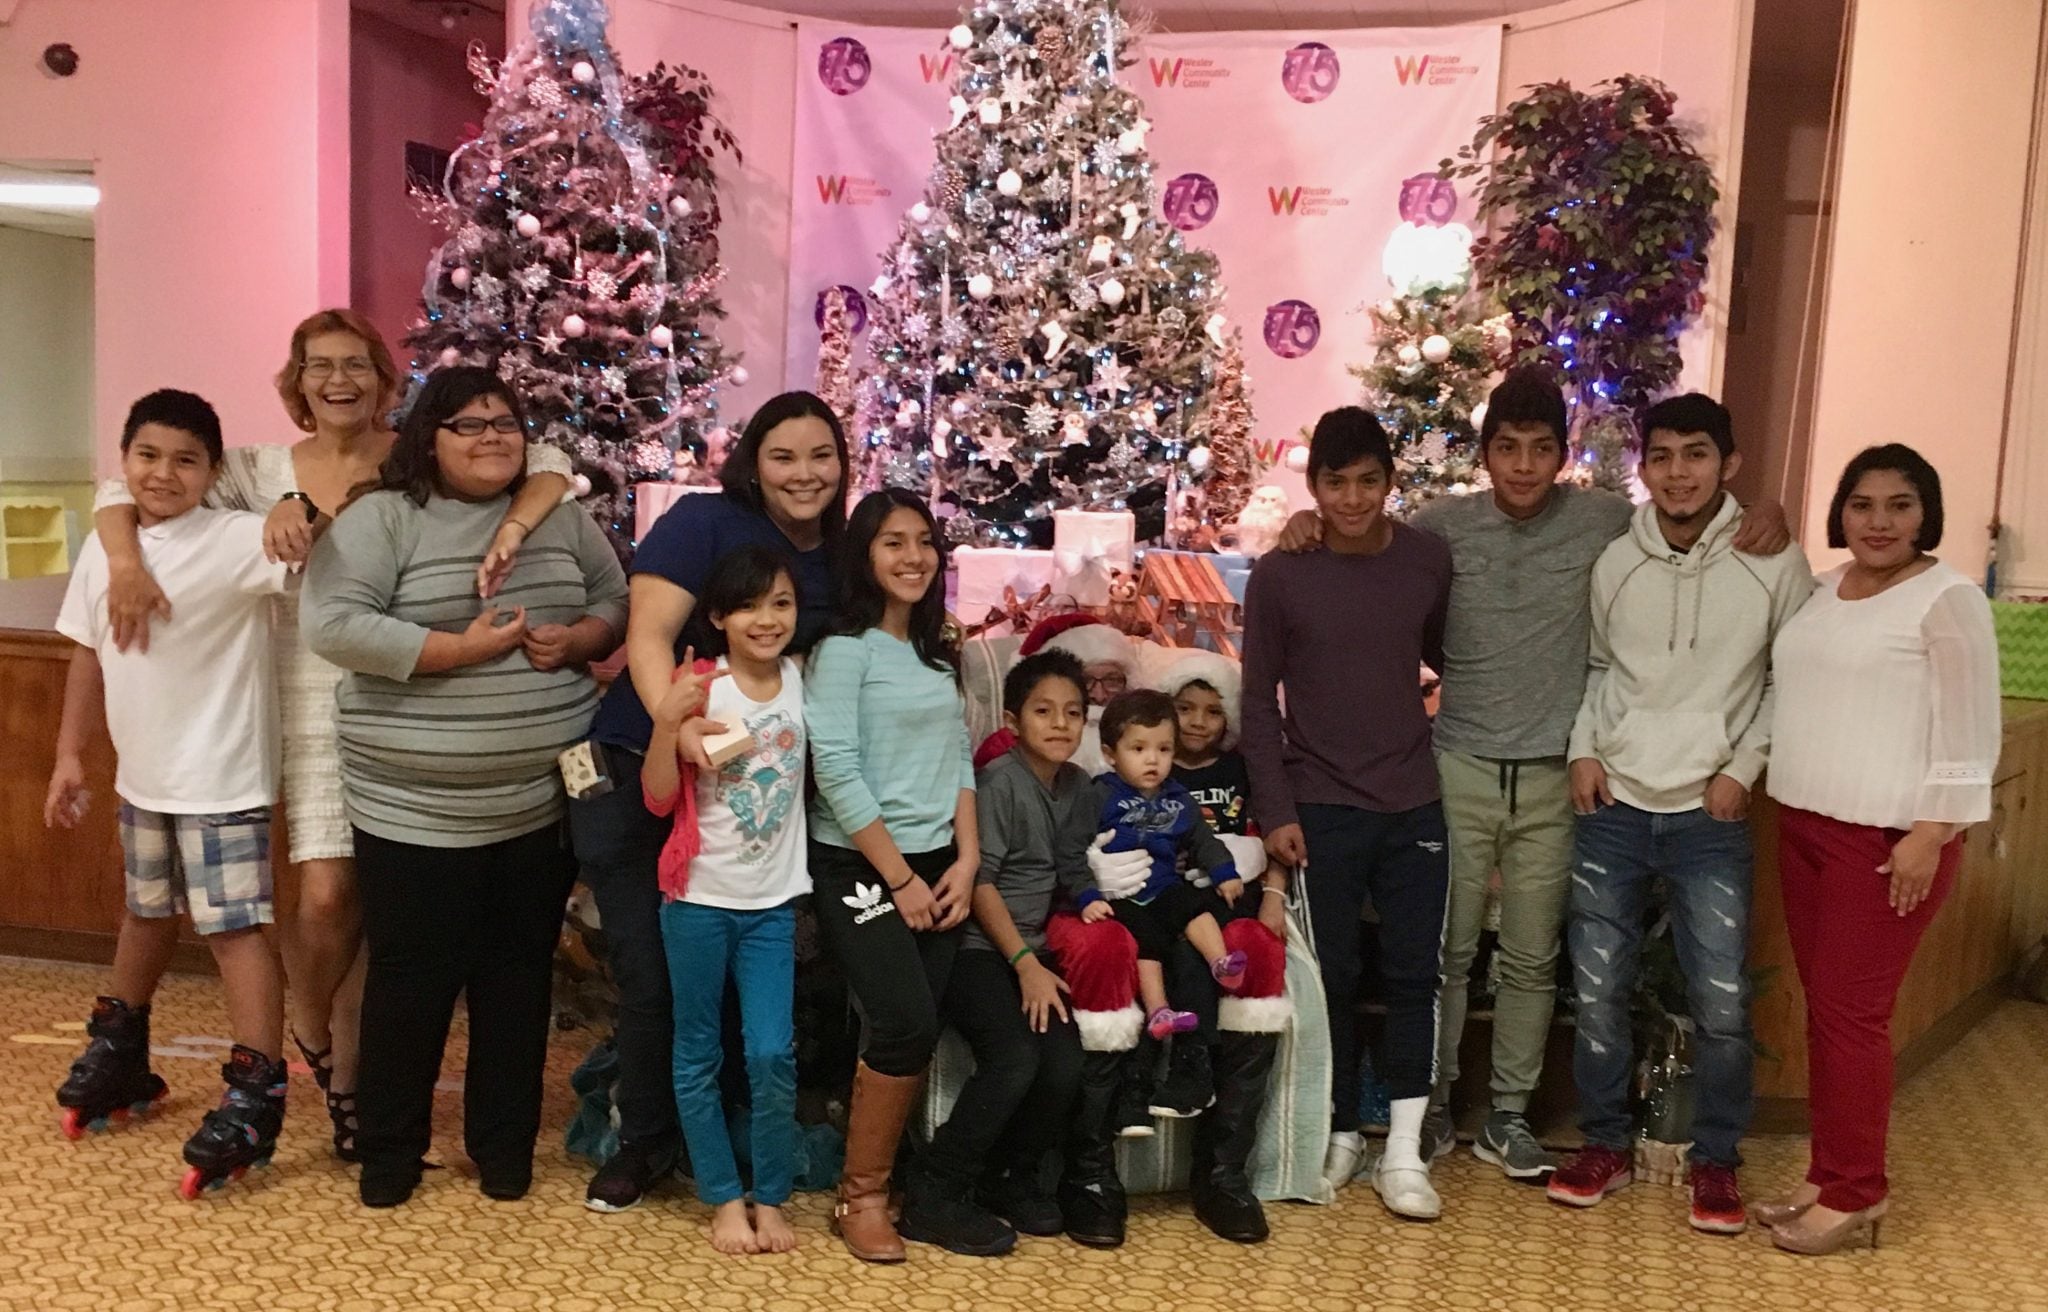 Bay Ltd Brings Christmas Joy To The Children Of The Wesley Community Center Bay Ltd